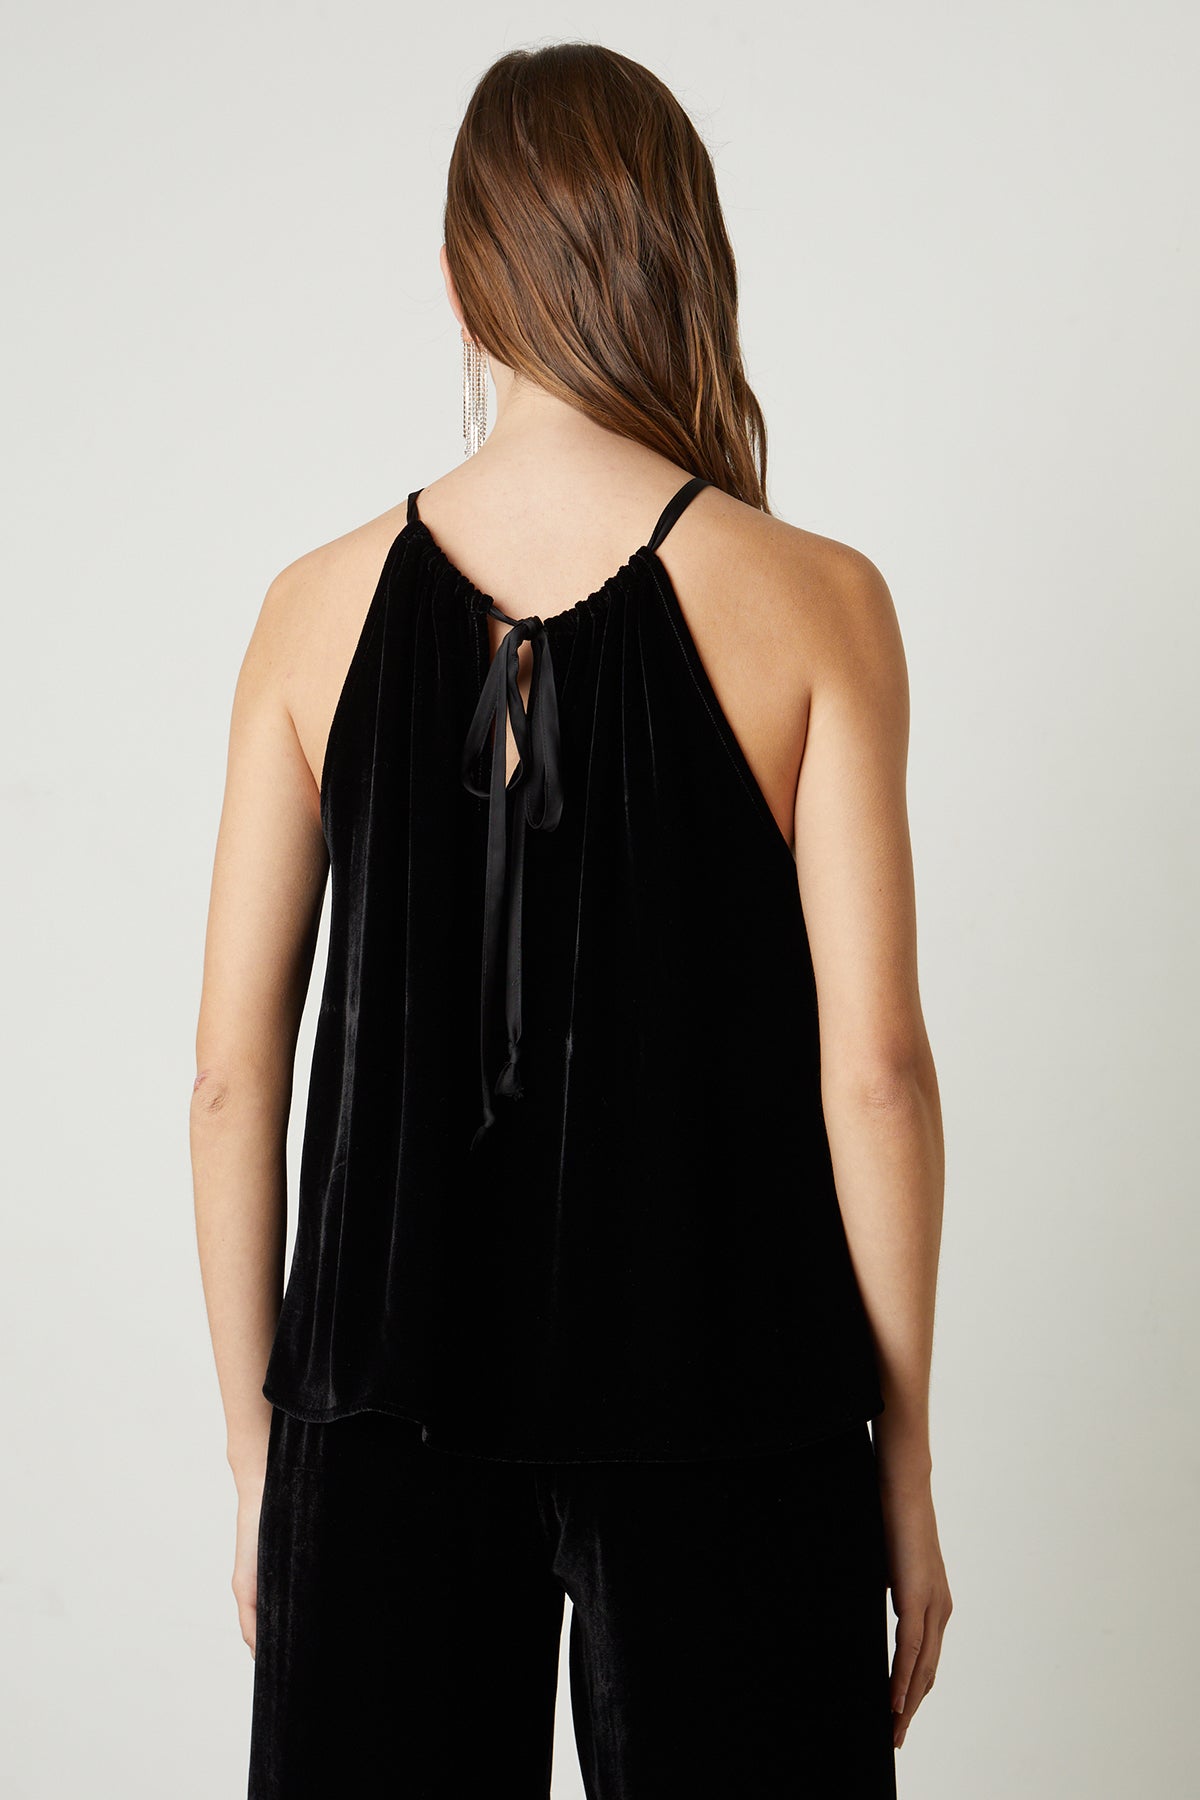 Aleaha Silk Velvet Halter Top in black back-25548537036993